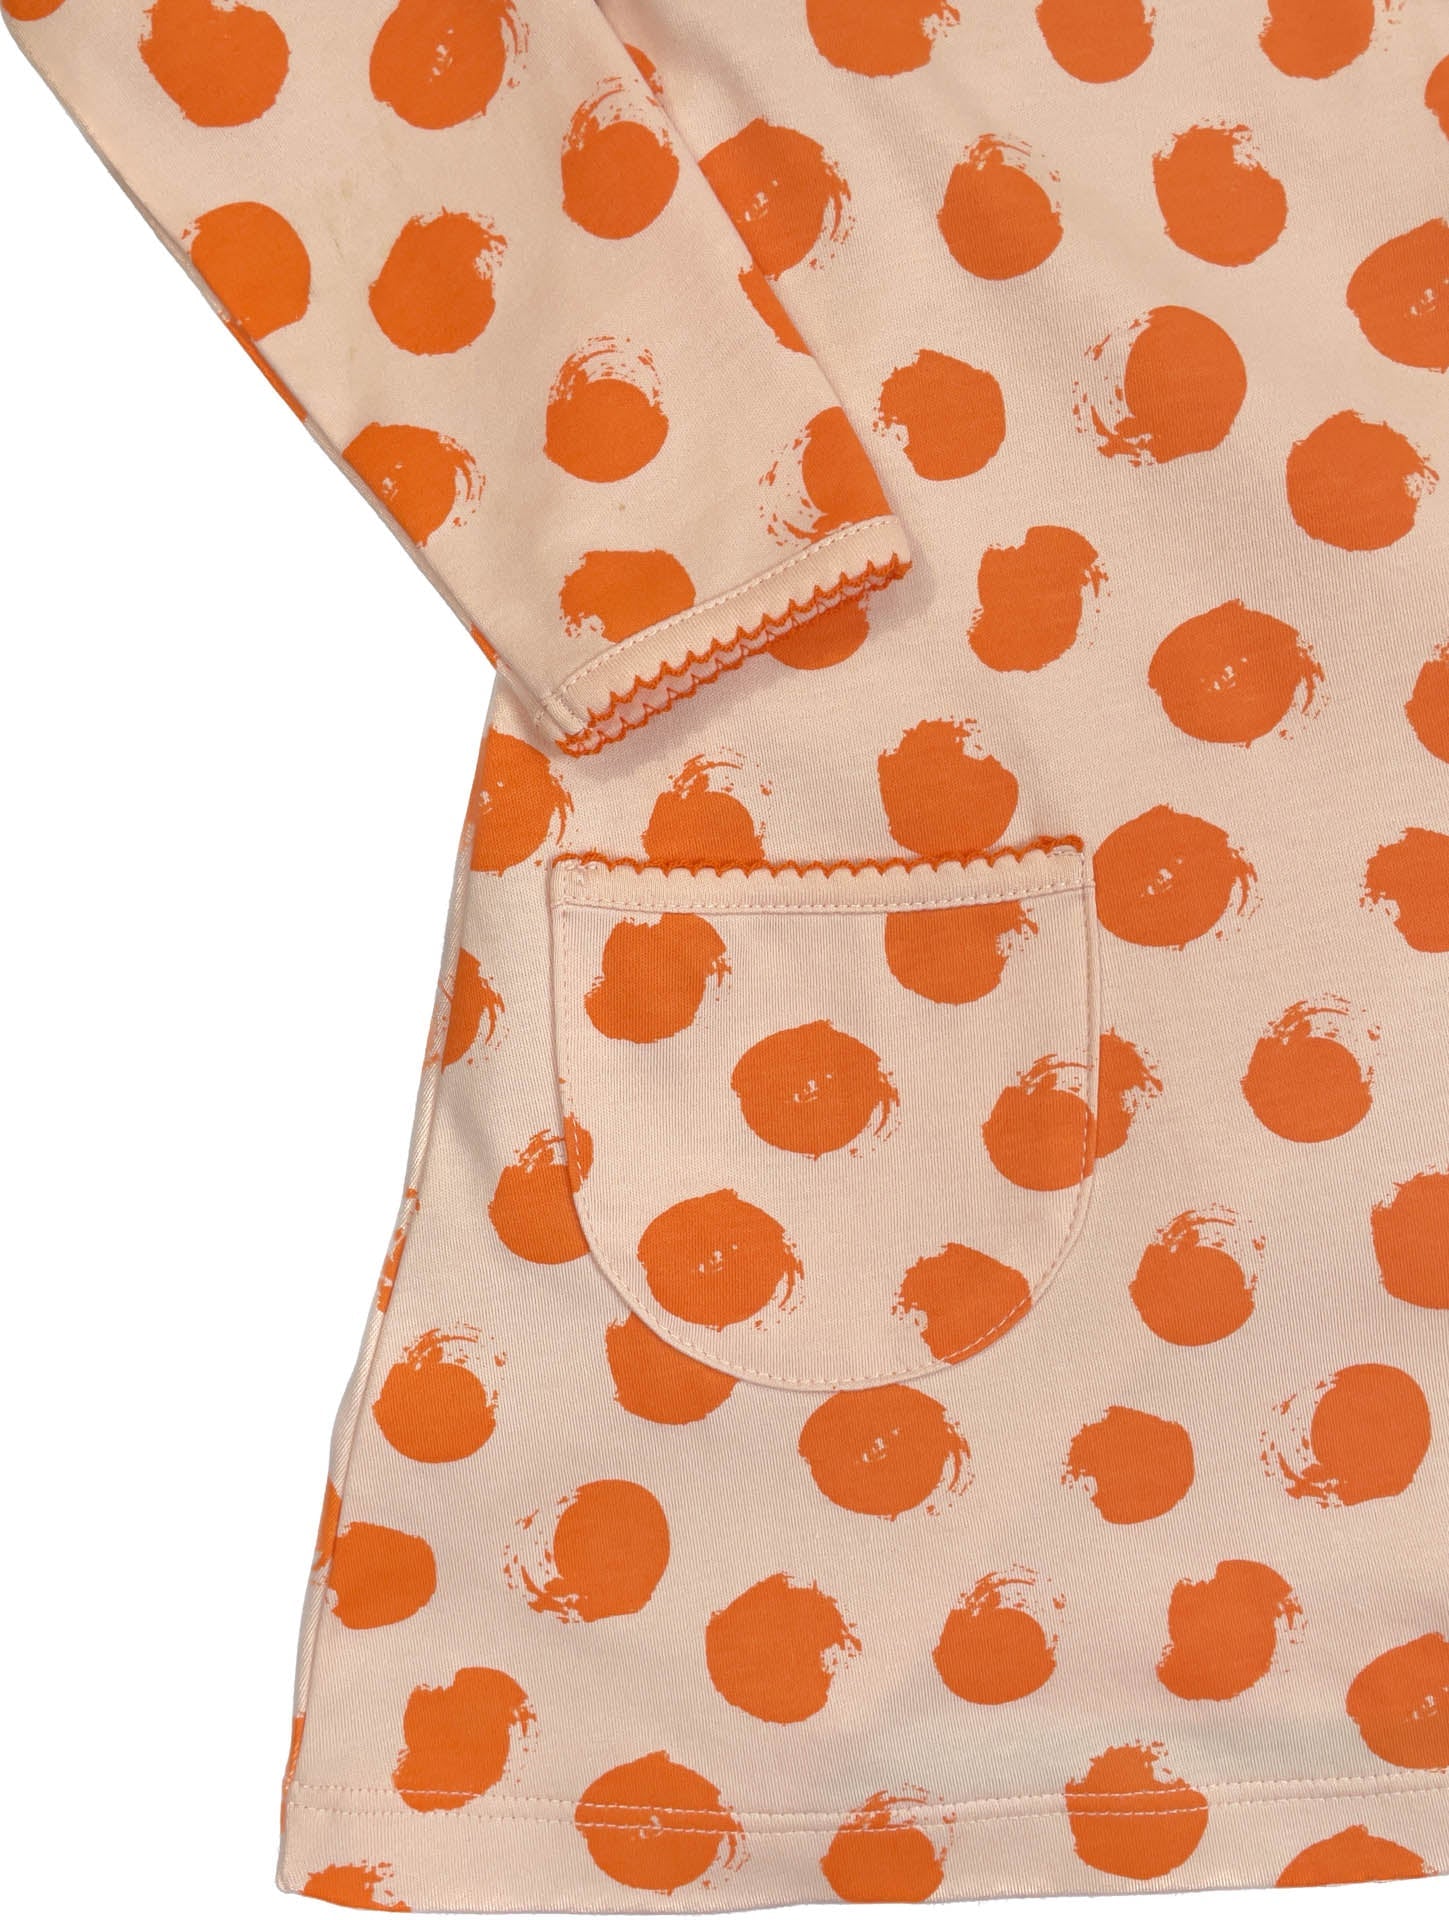 Details of Heyward House Orange Polka Dot Pocket Twirl Dress